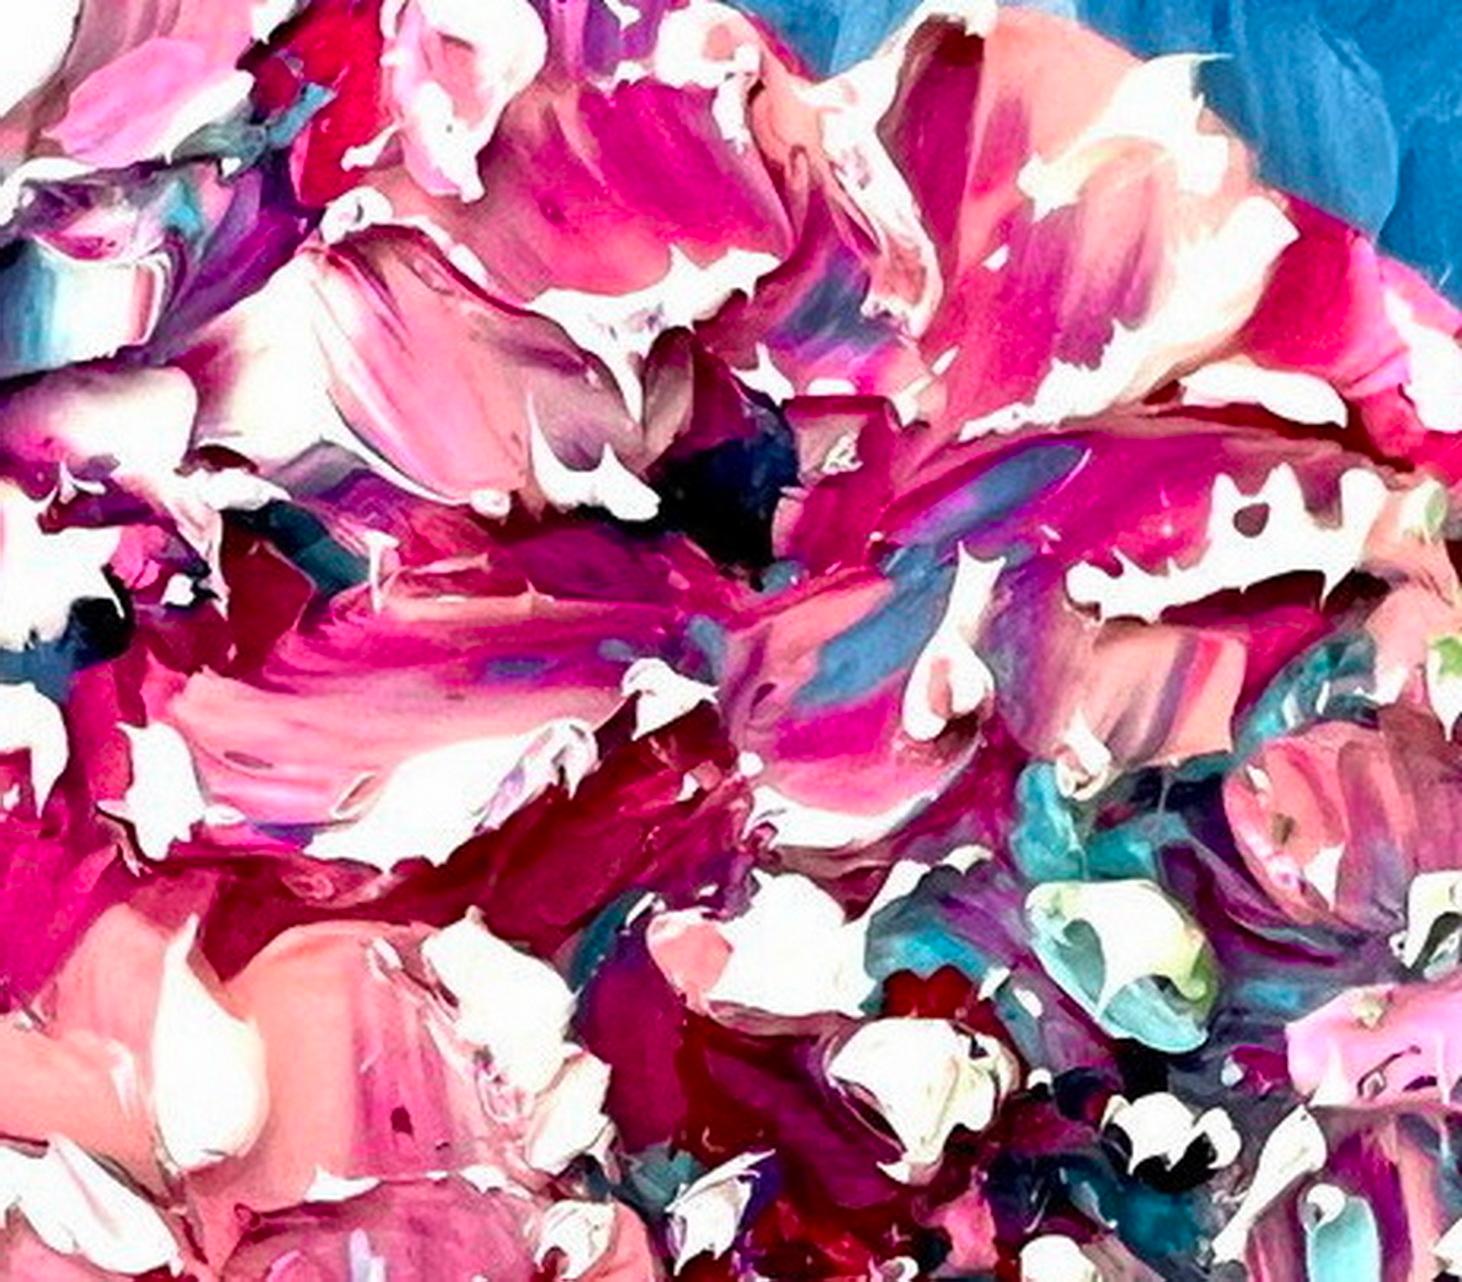  Spring Impression. Original oil impasto painting, impressionism, sakura bloom. - Abstract Impressionist Painting by Vik Schroeder 